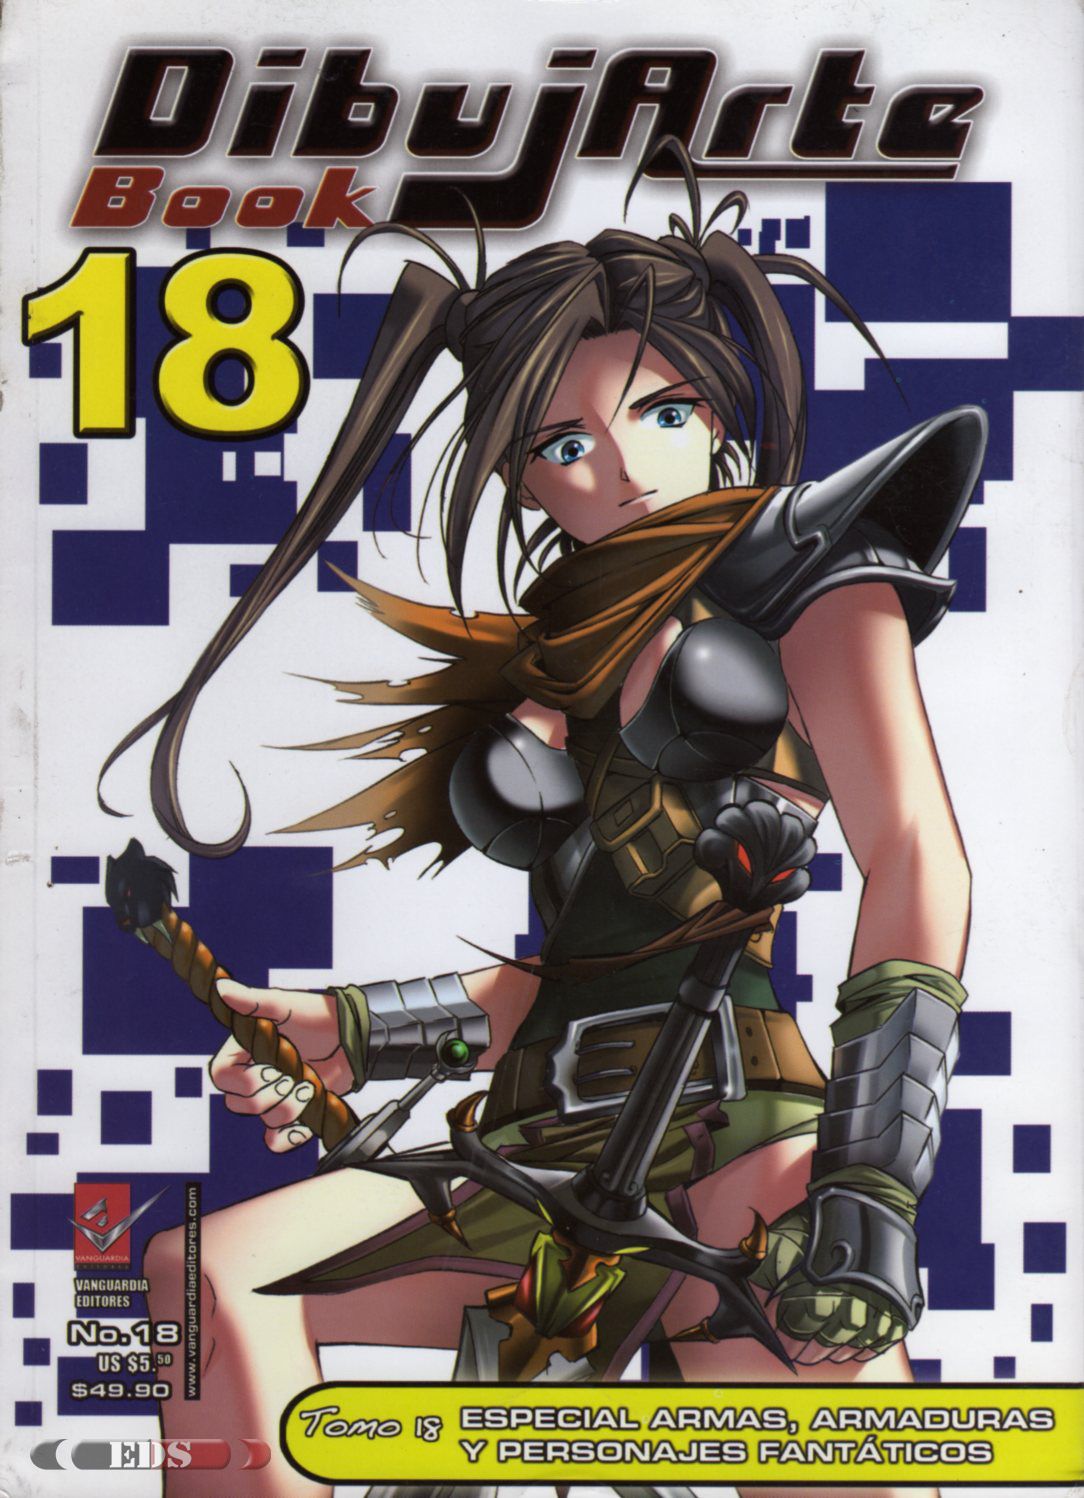 DibujArte Epecial Manga #18/20 - Armas armaduras y Personajes fantasticos [Spanish] 1